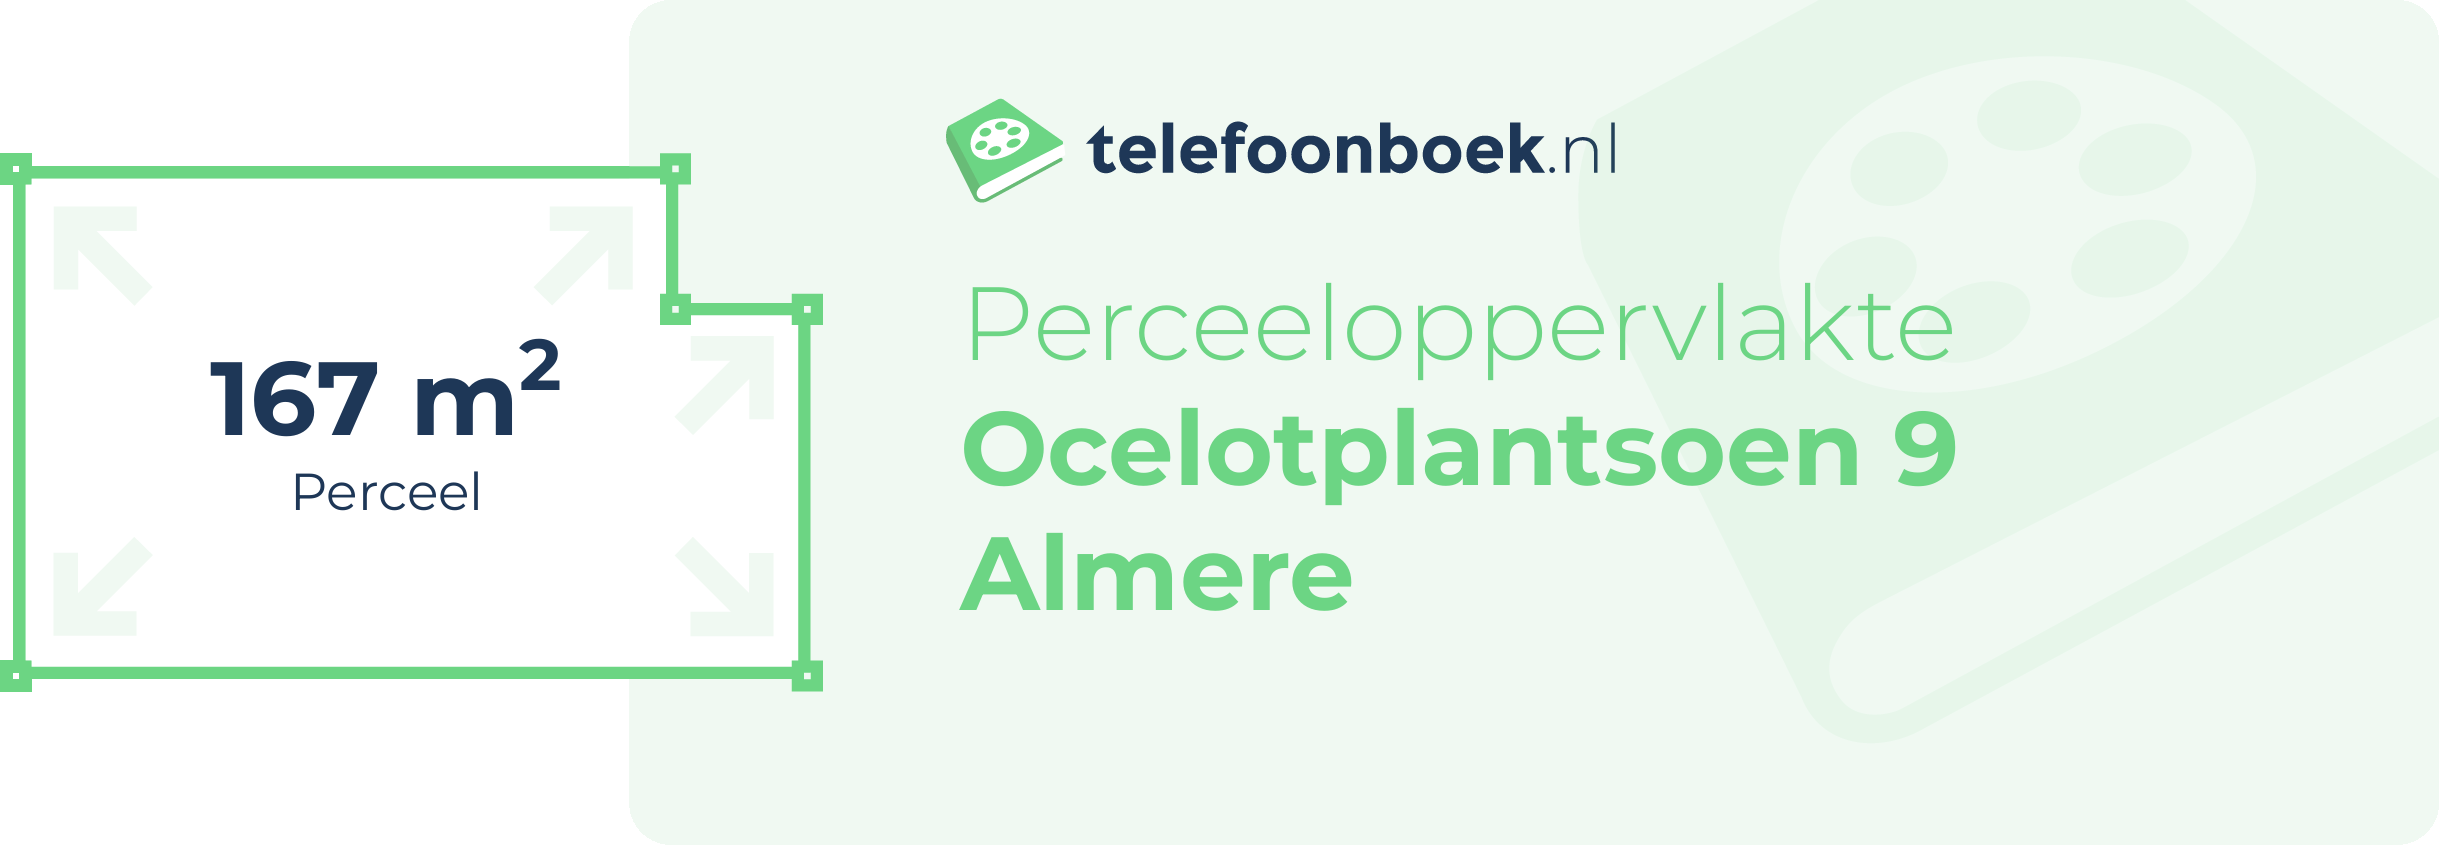 Perceeloppervlakte Ocelotplantsoen 9 Almere